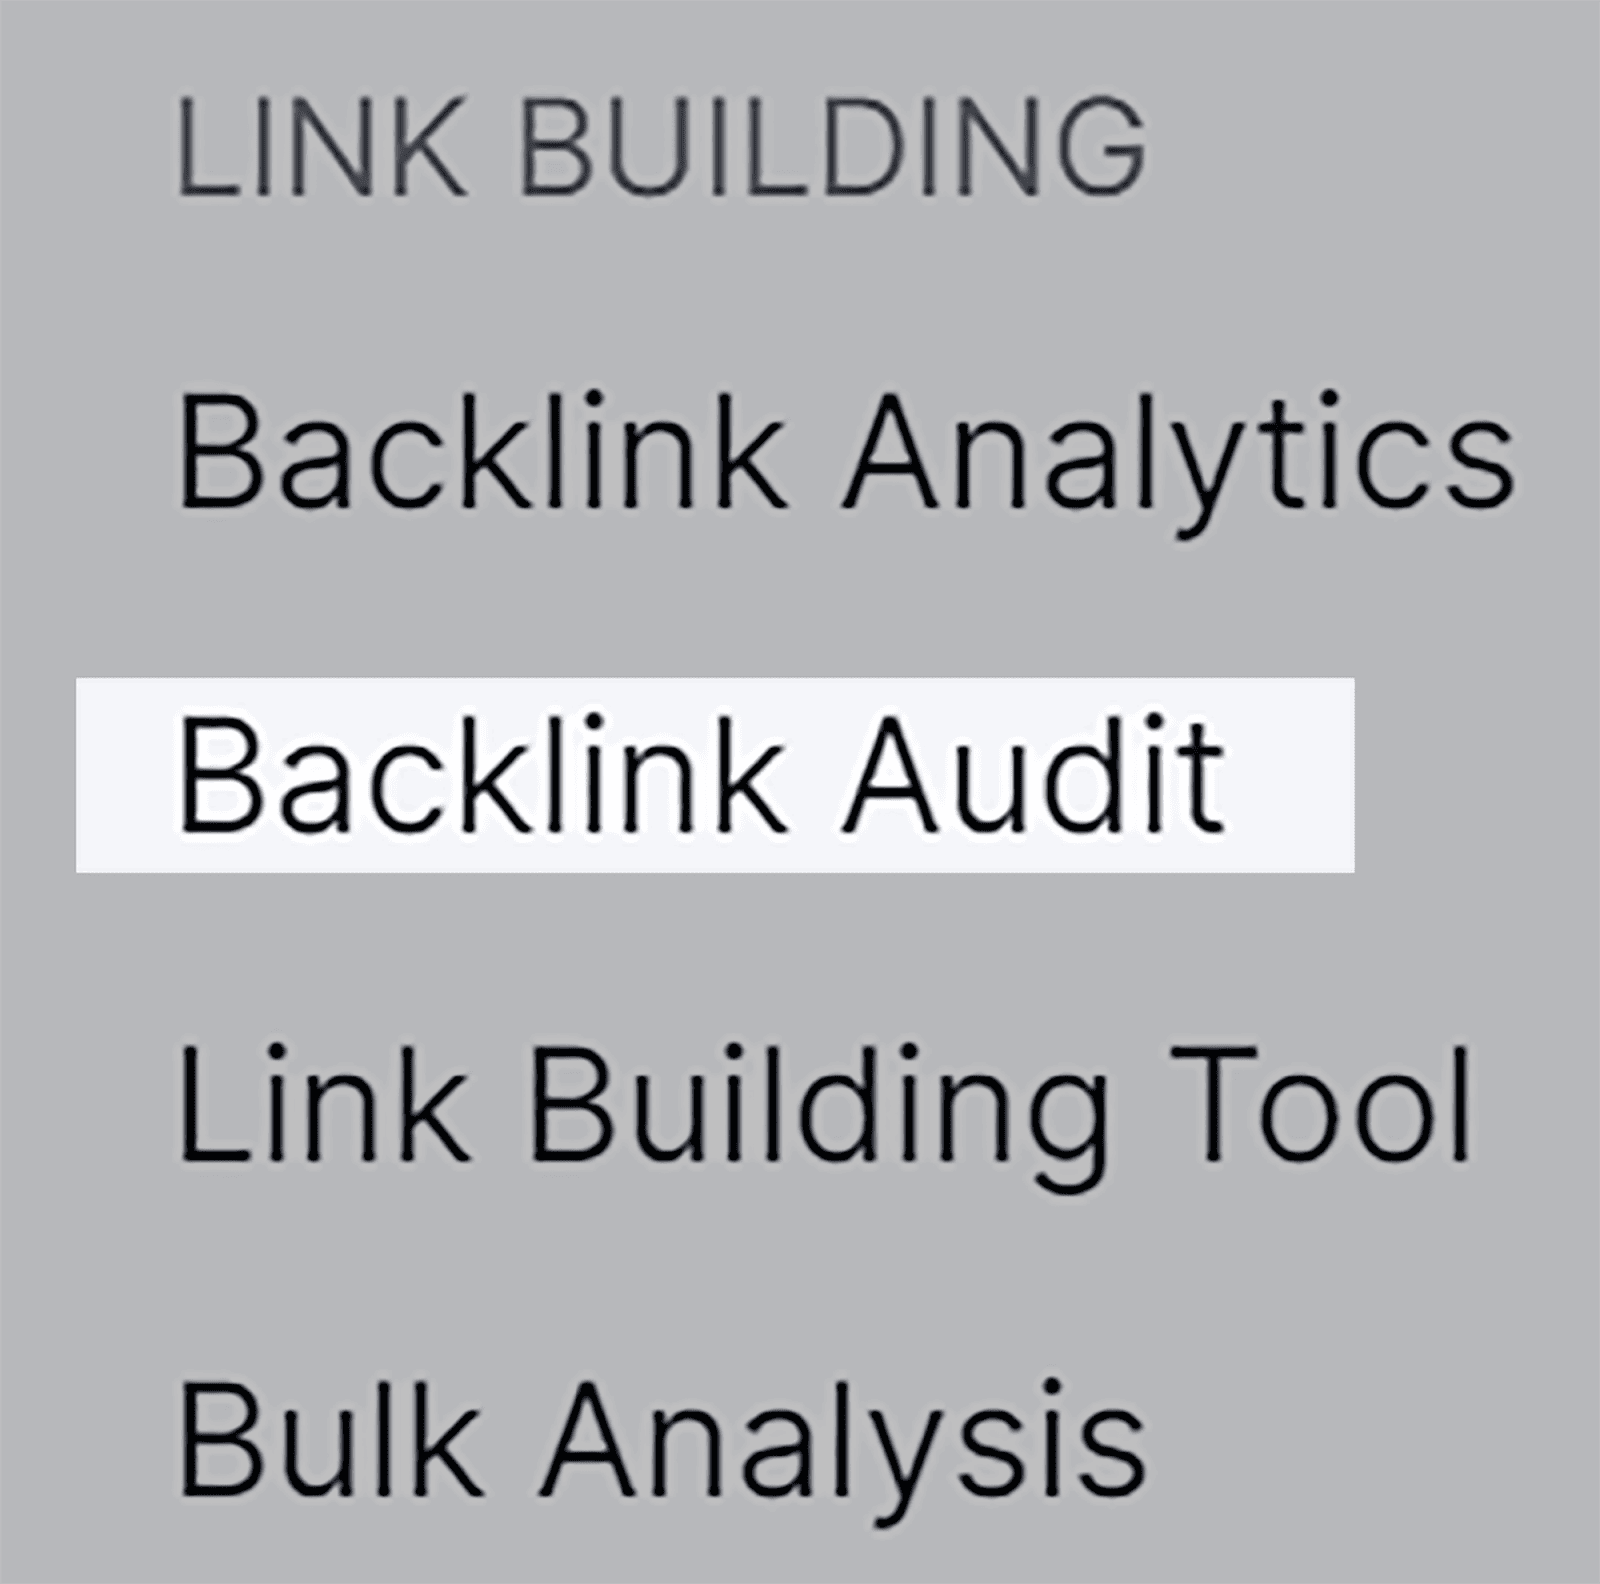 Use backlink tool under link building section